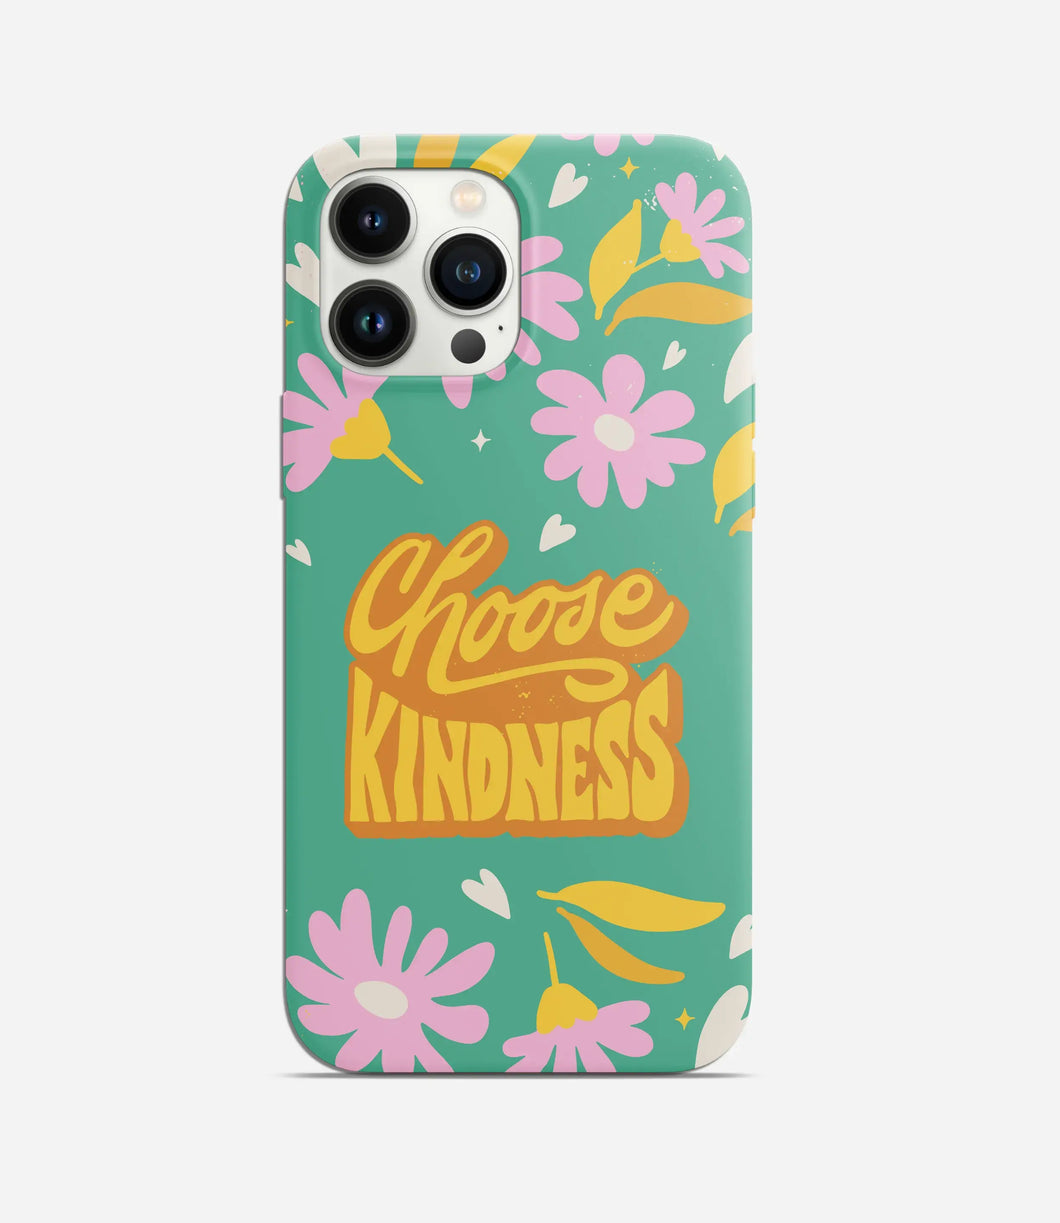 Choose Kindness Phone Case